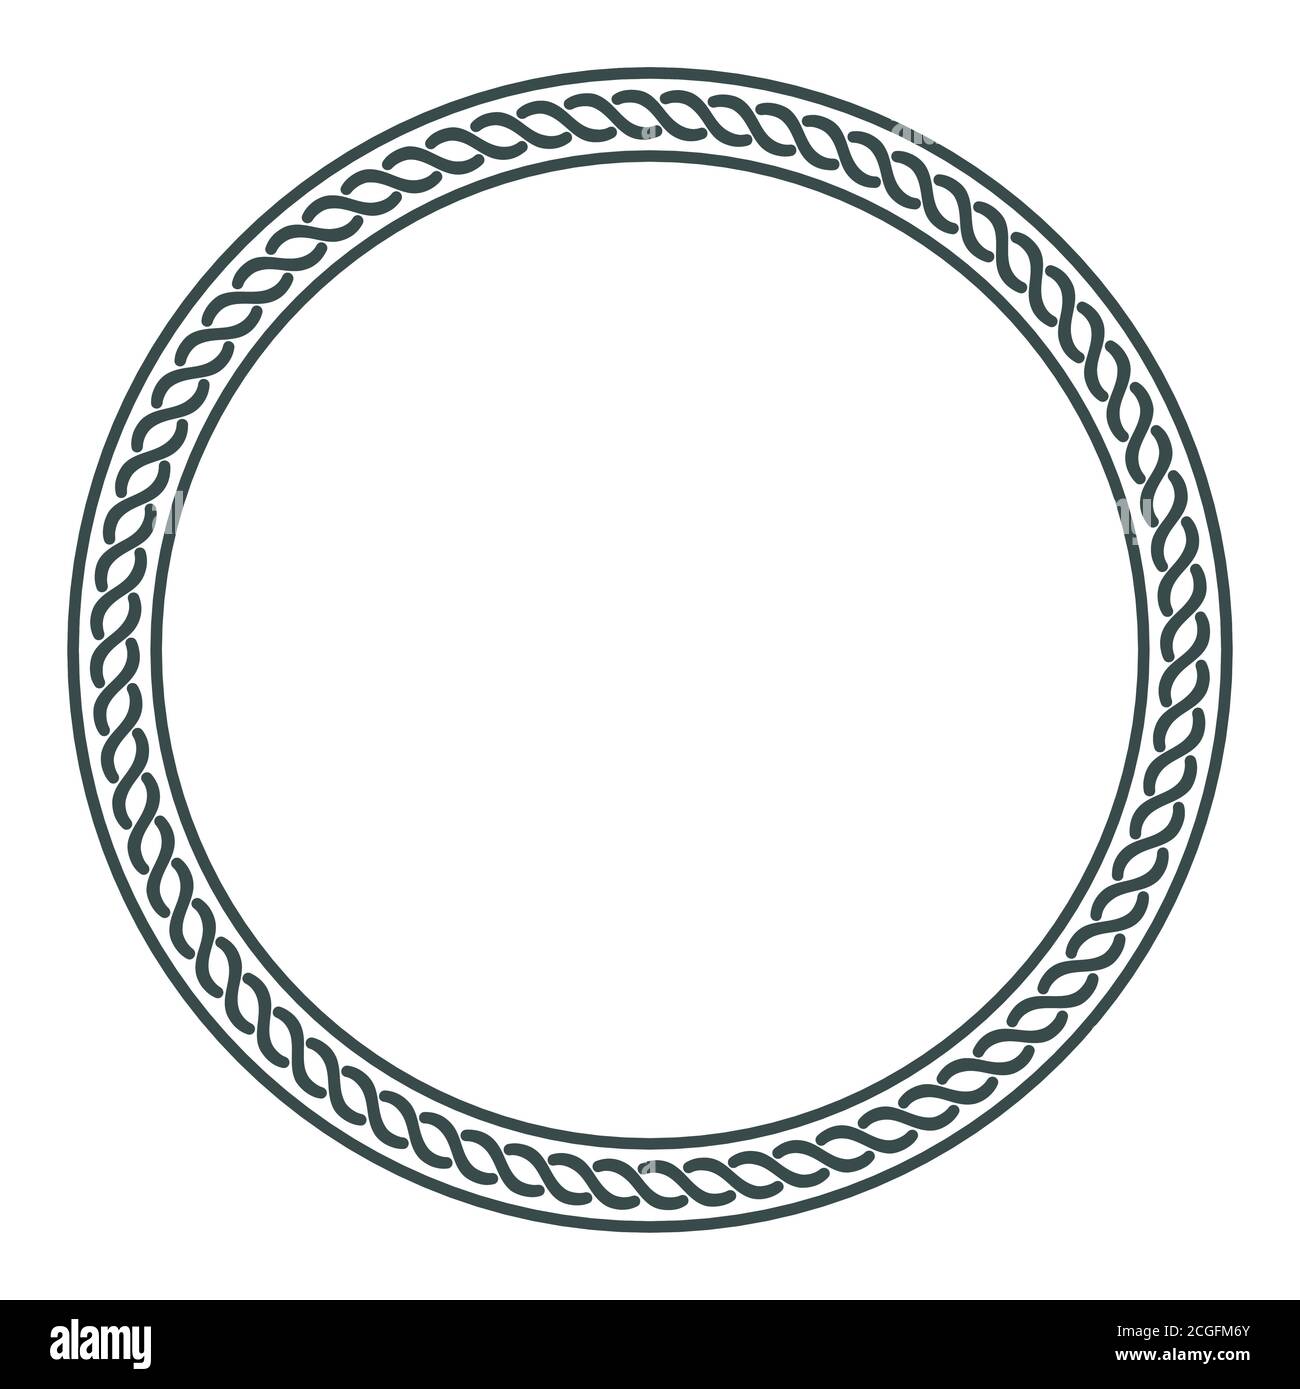 celtic knot round border